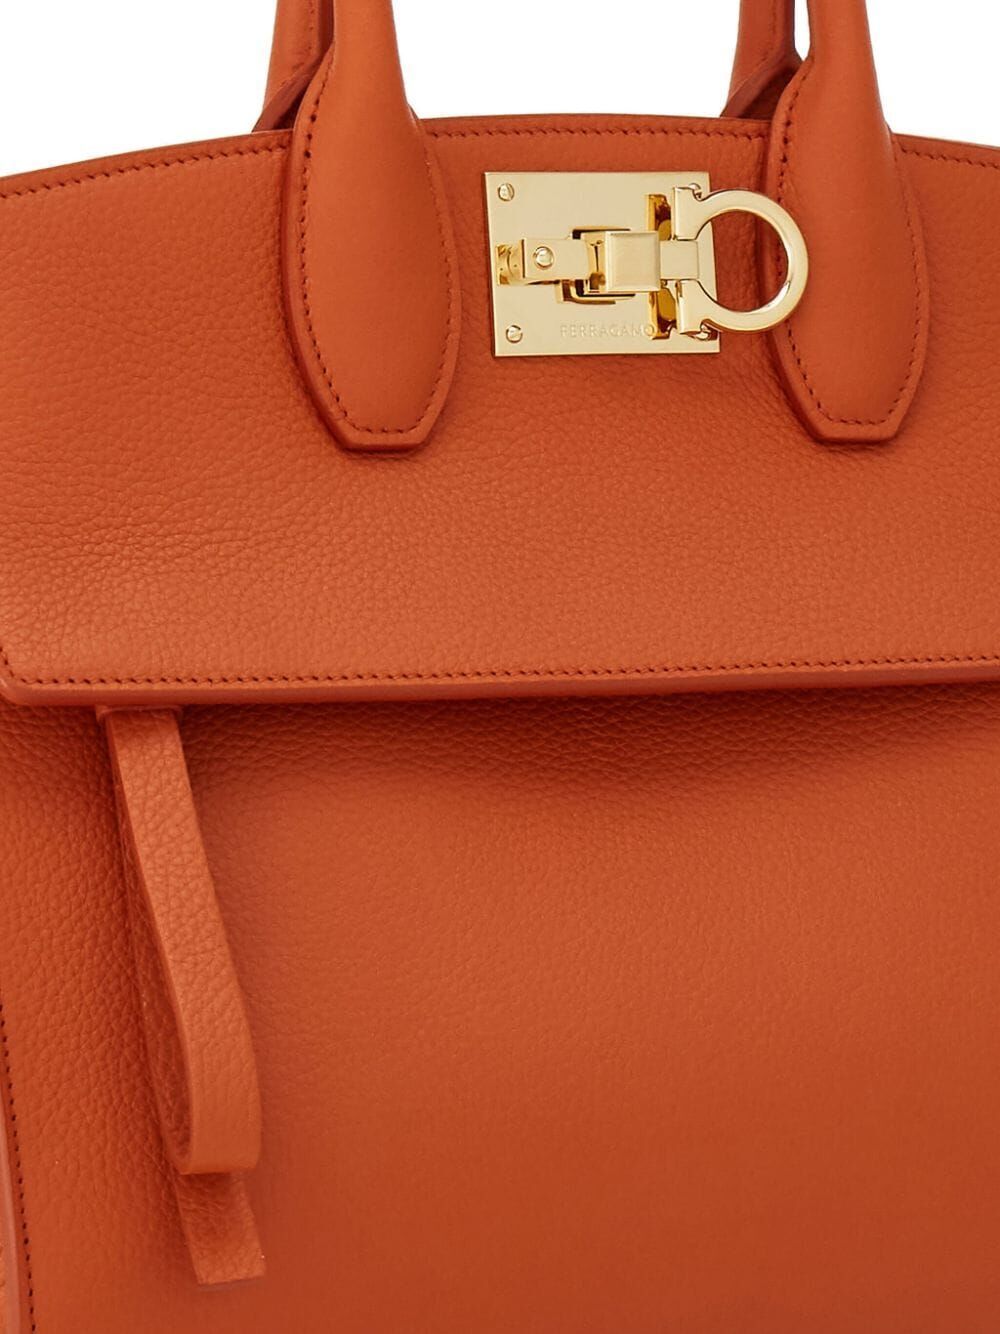 FERRAGAMO Luxurious Brown Calf Leather Handbag for the Modern Woman